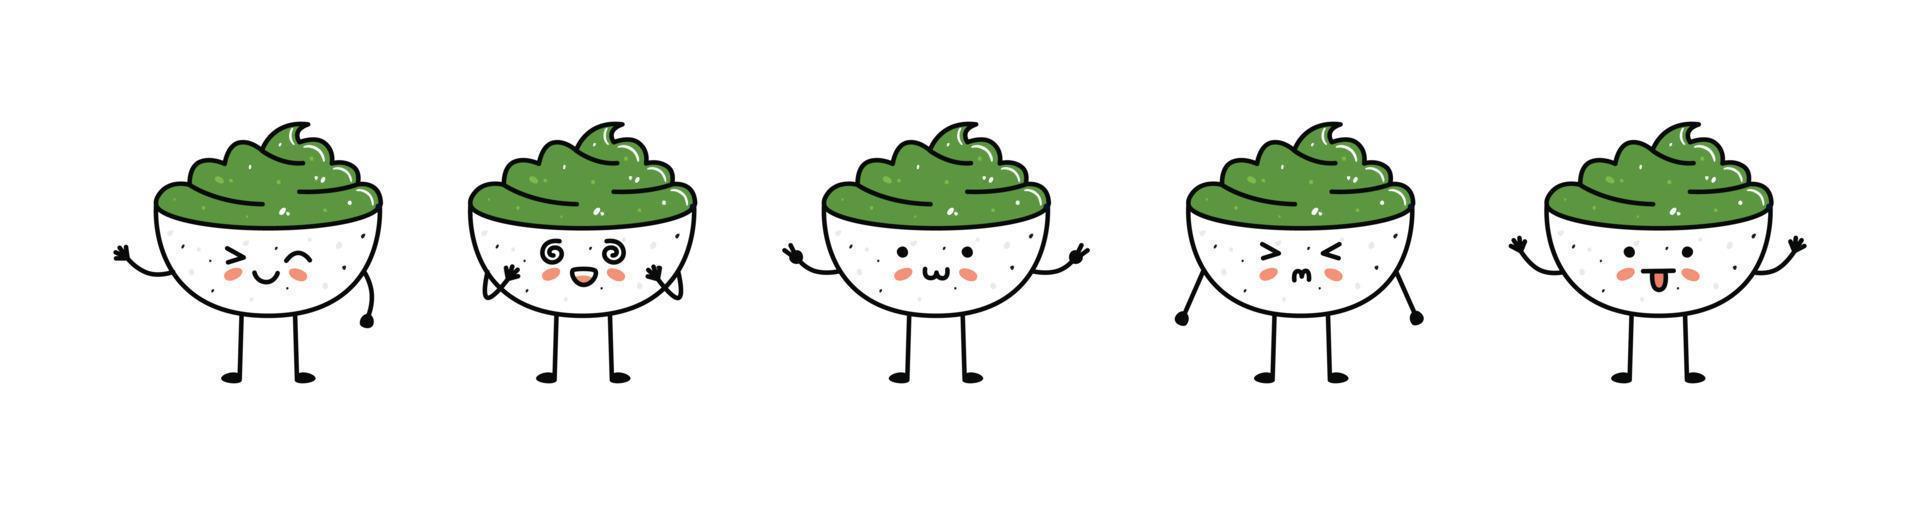 reeks van kawaii wasabi kom sushi mascottes in tekenfilm stijl. vector